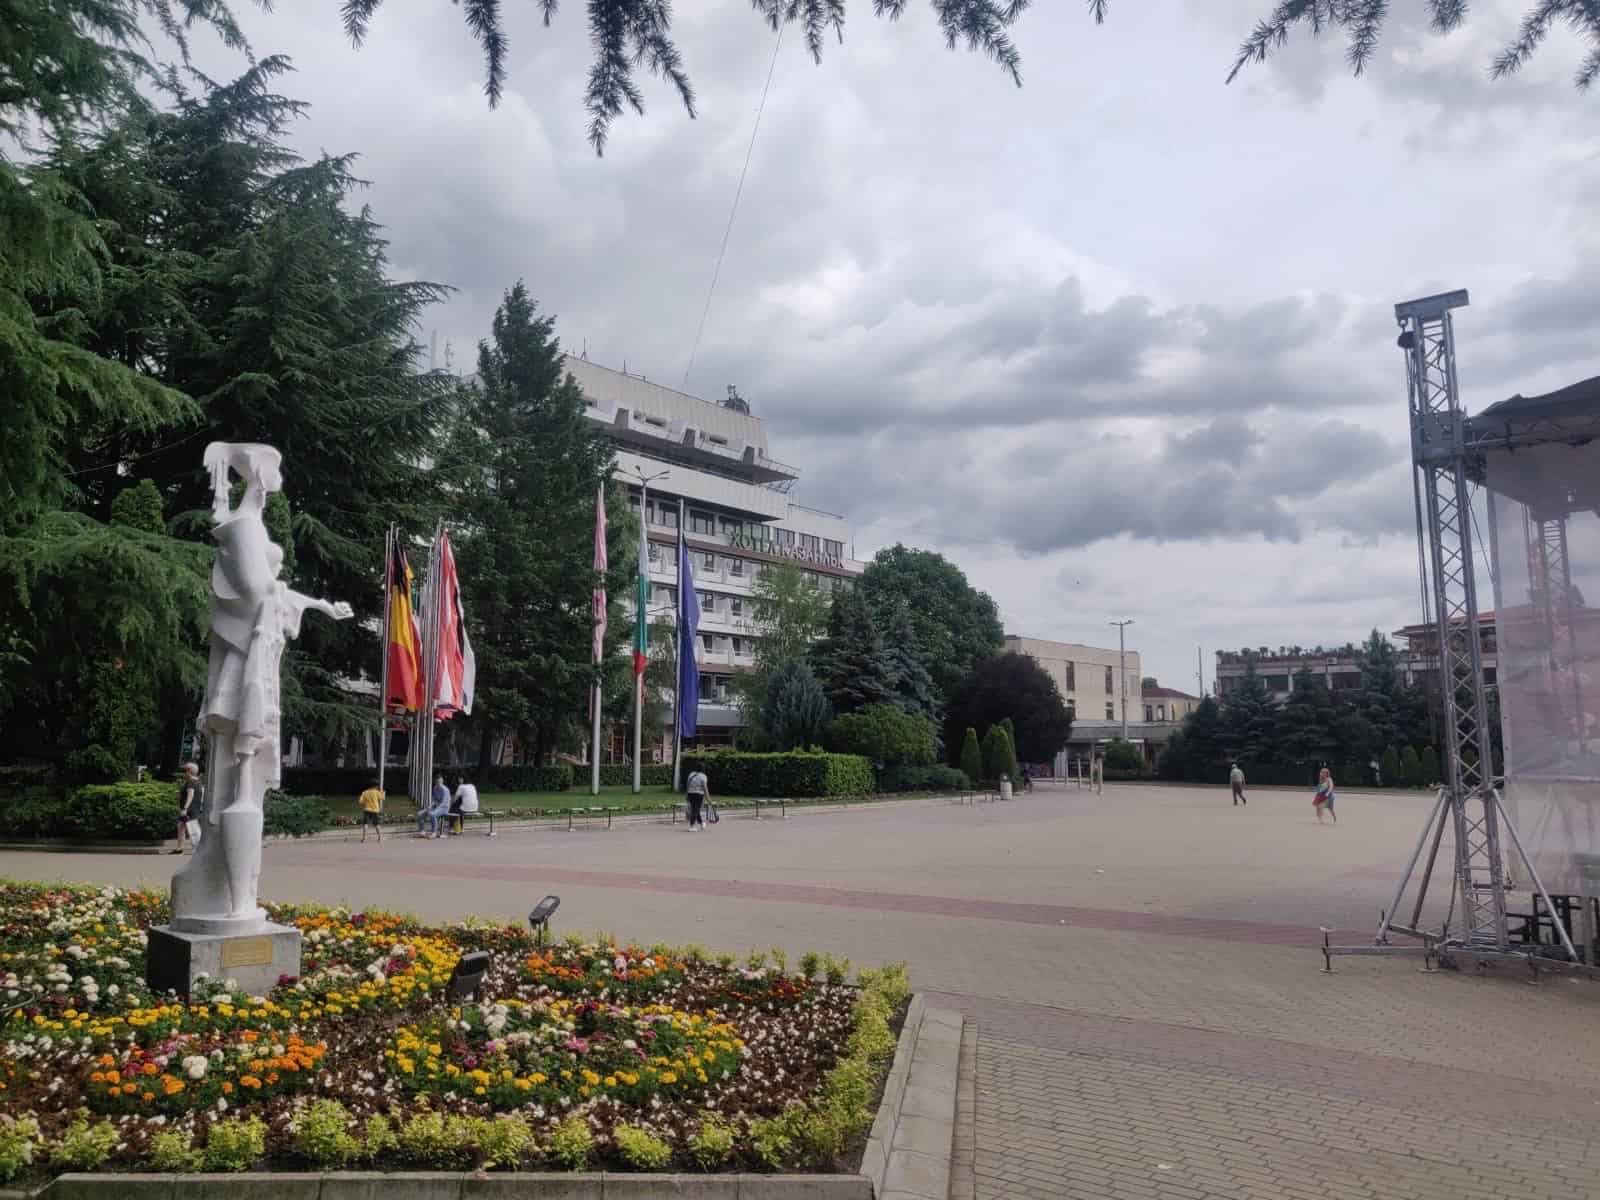 The main square of Kazanlak